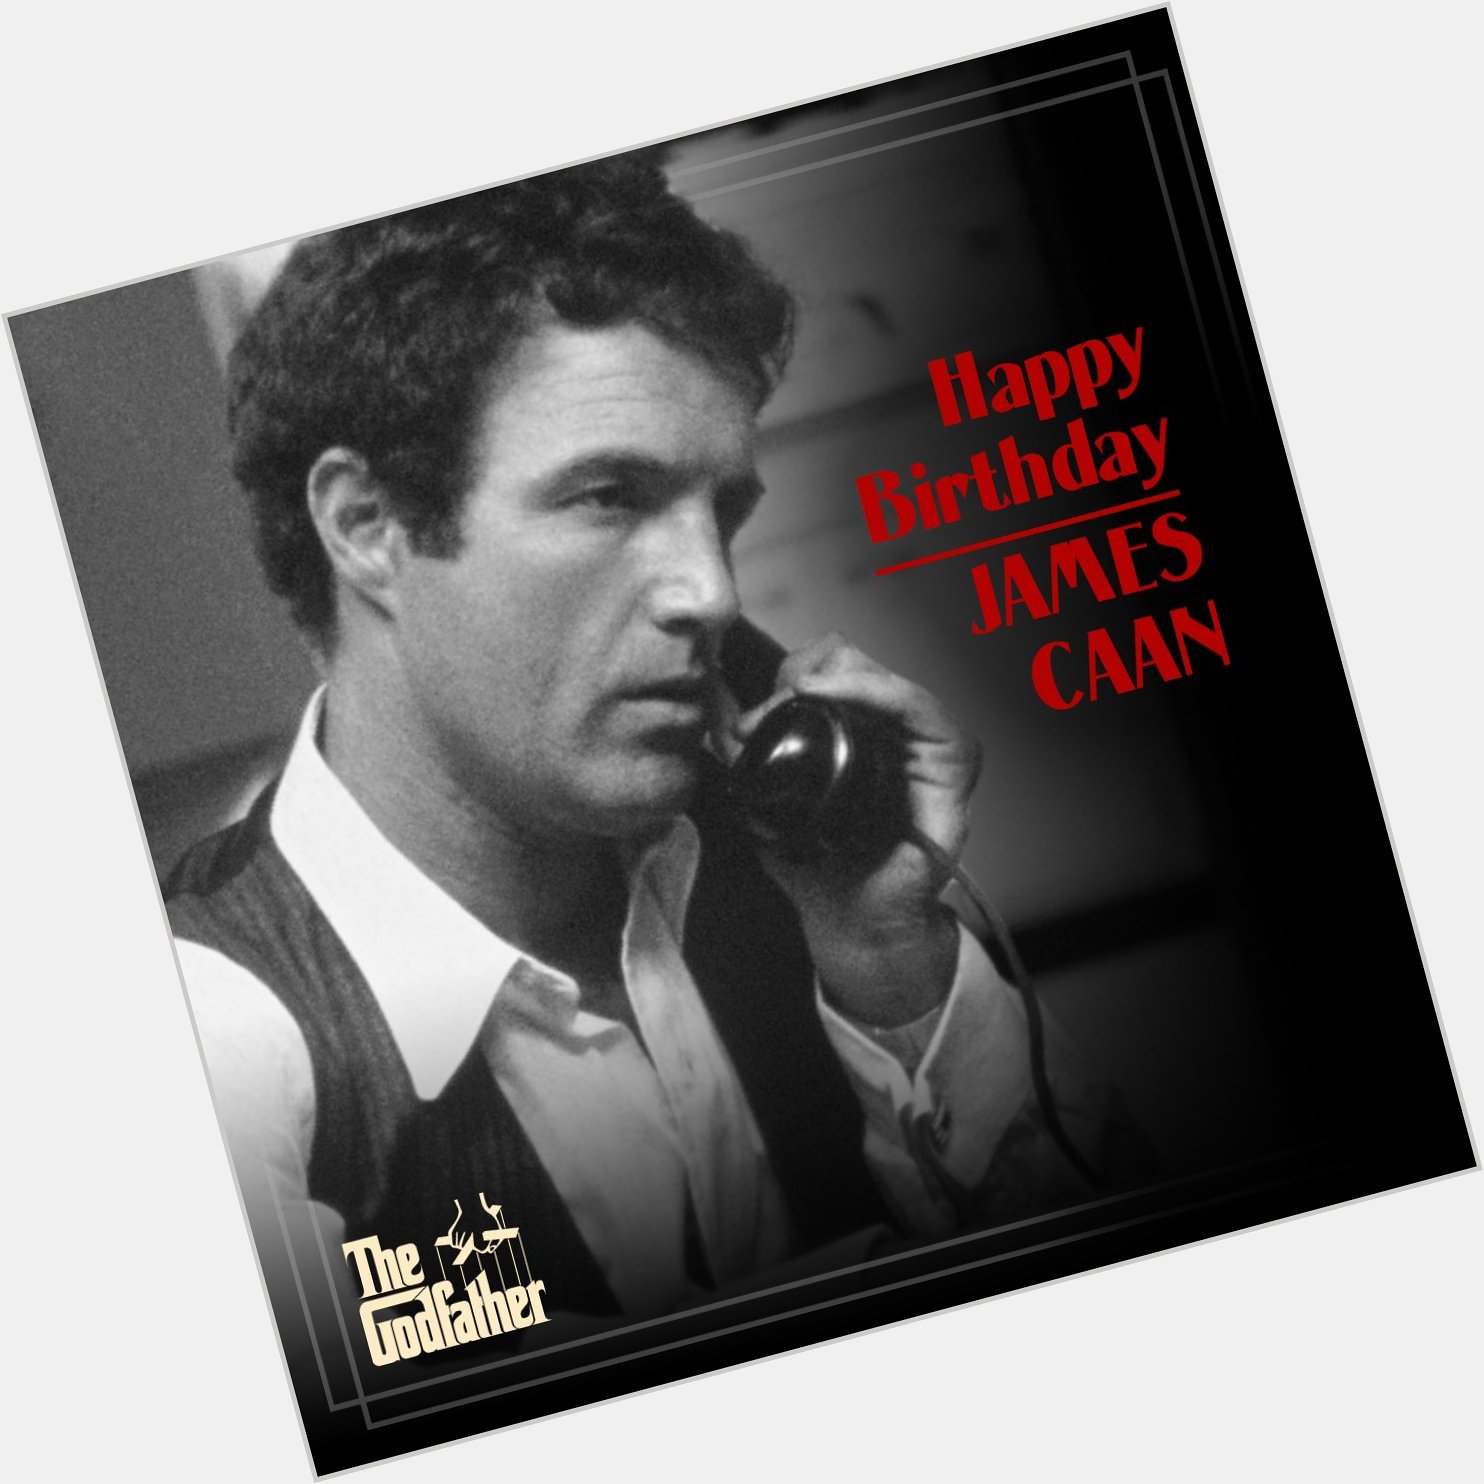 Wishing a happy birthday to James Caan, aka Sonny Corleone. 